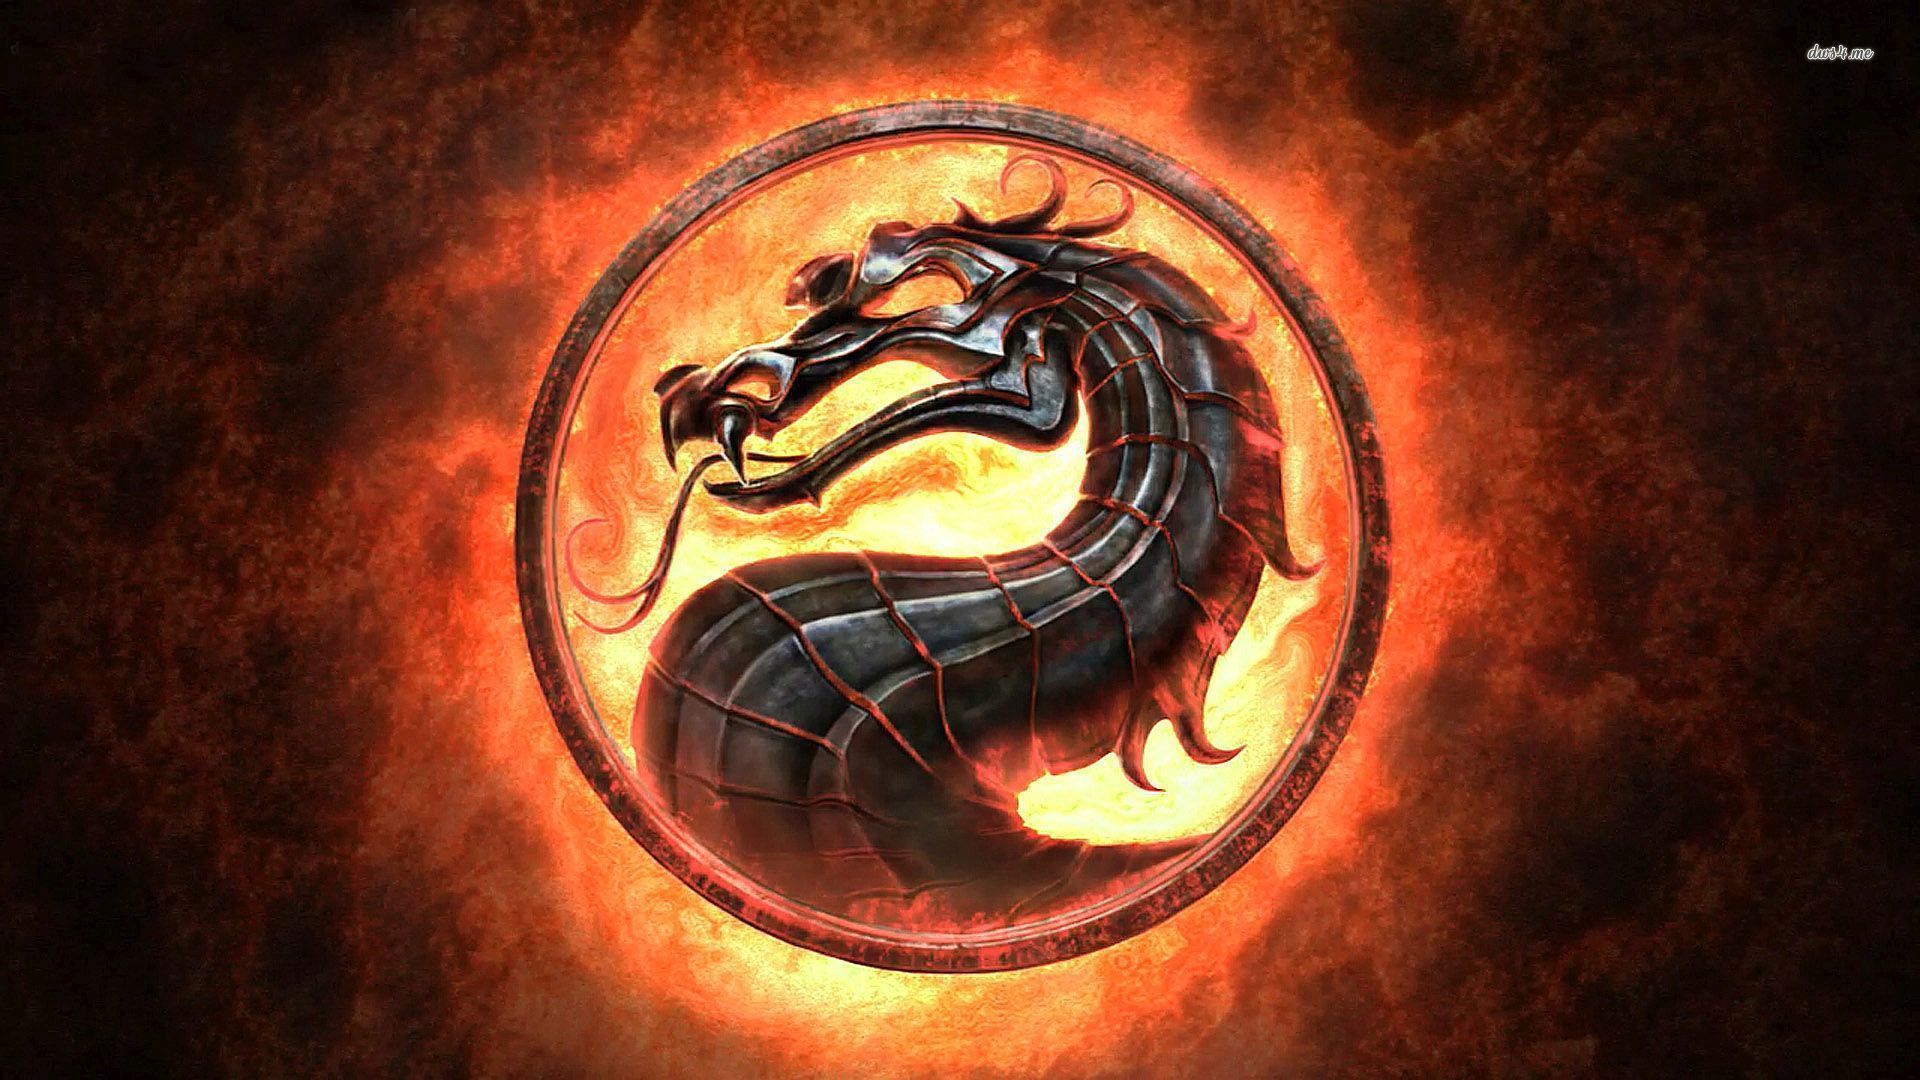 Mortal Kombat Dragon Logo wallpaper - Game wallpapers - #28876